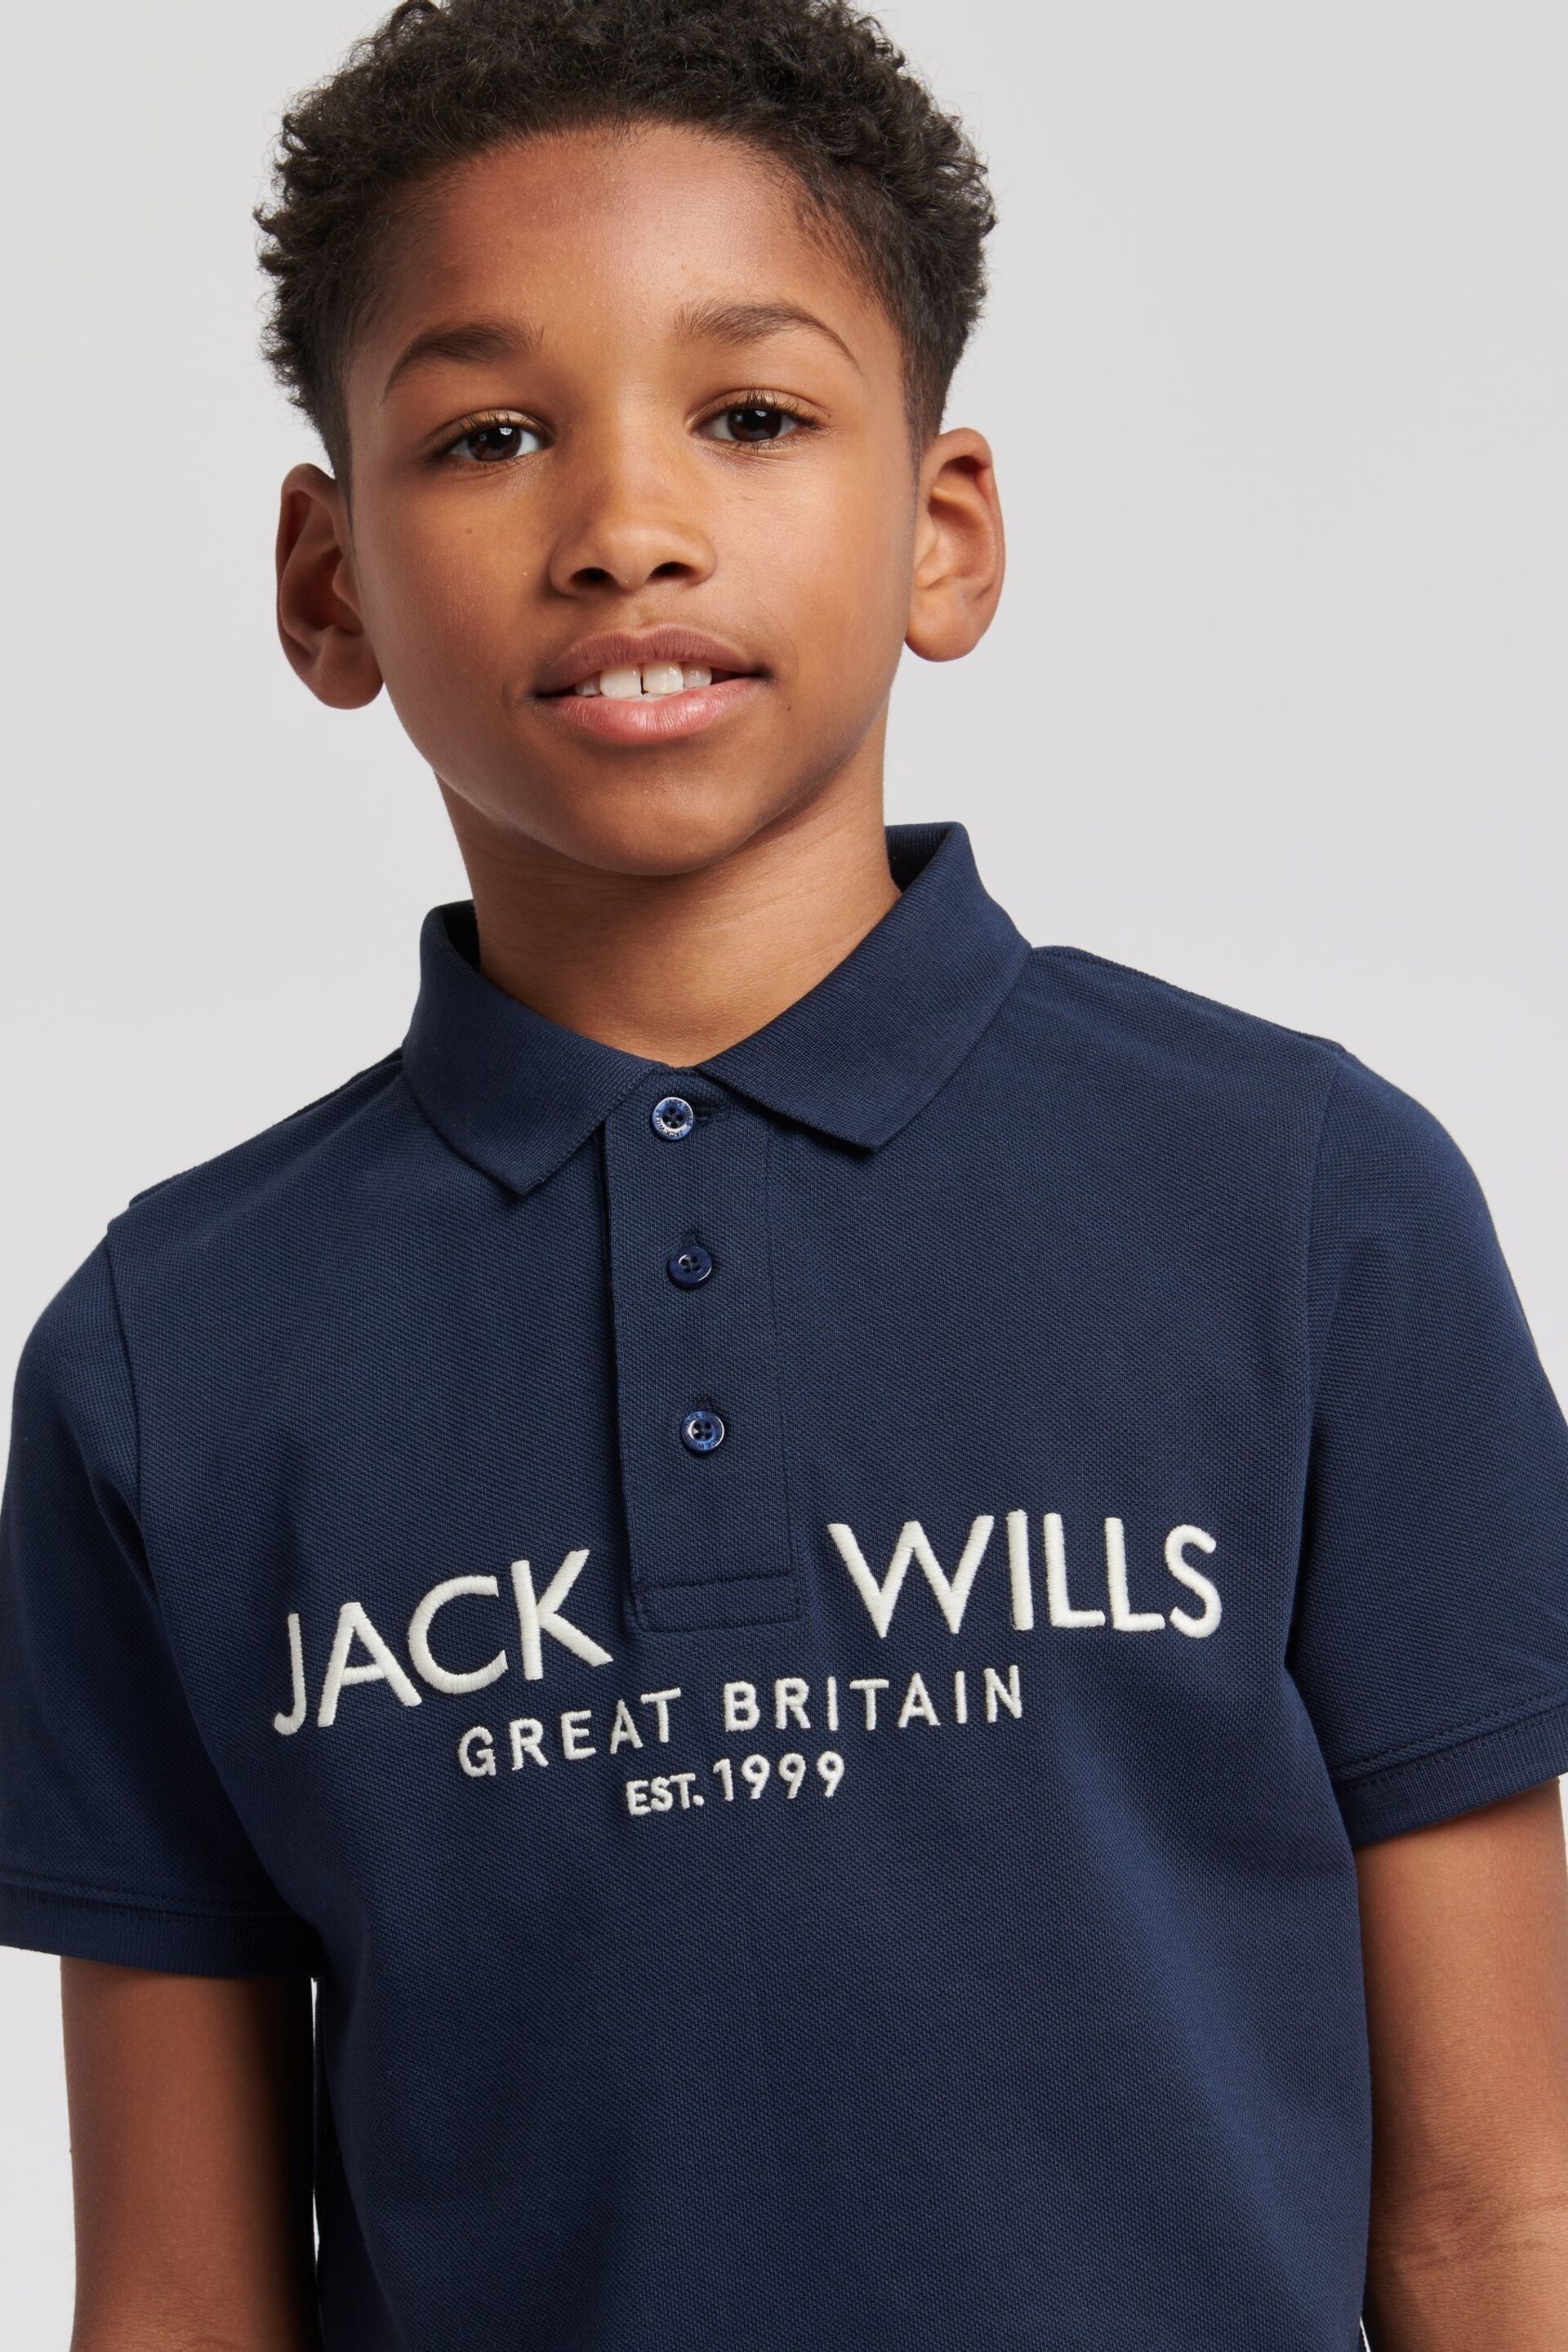 Jack Wills Boys Pique Polo Shirt - Image 3 of 7